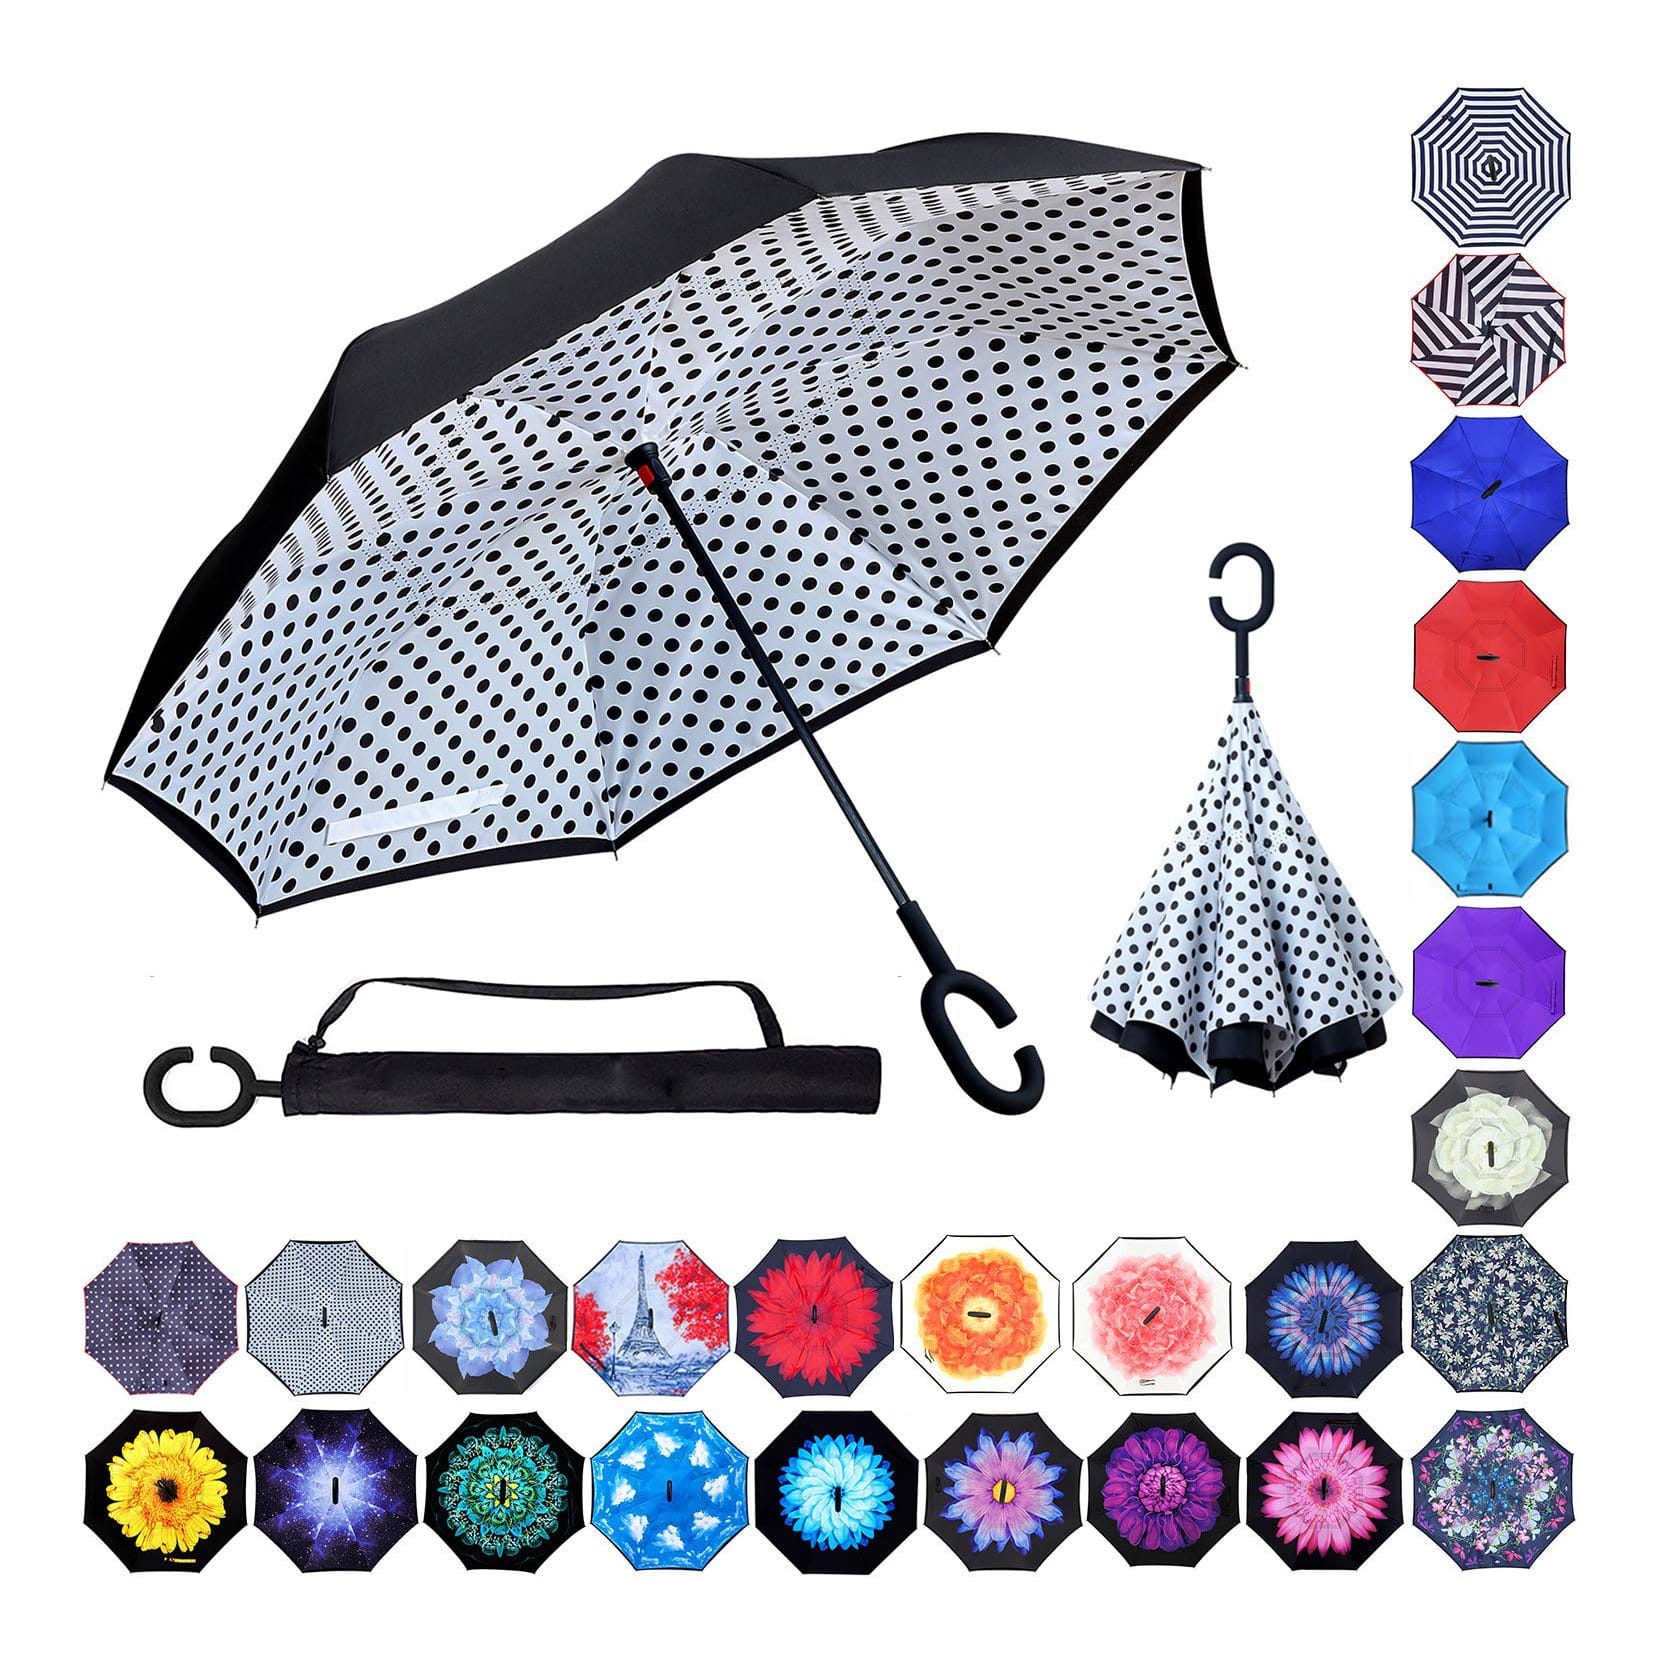 Z Zameka Inverted Double Layer Umbrella